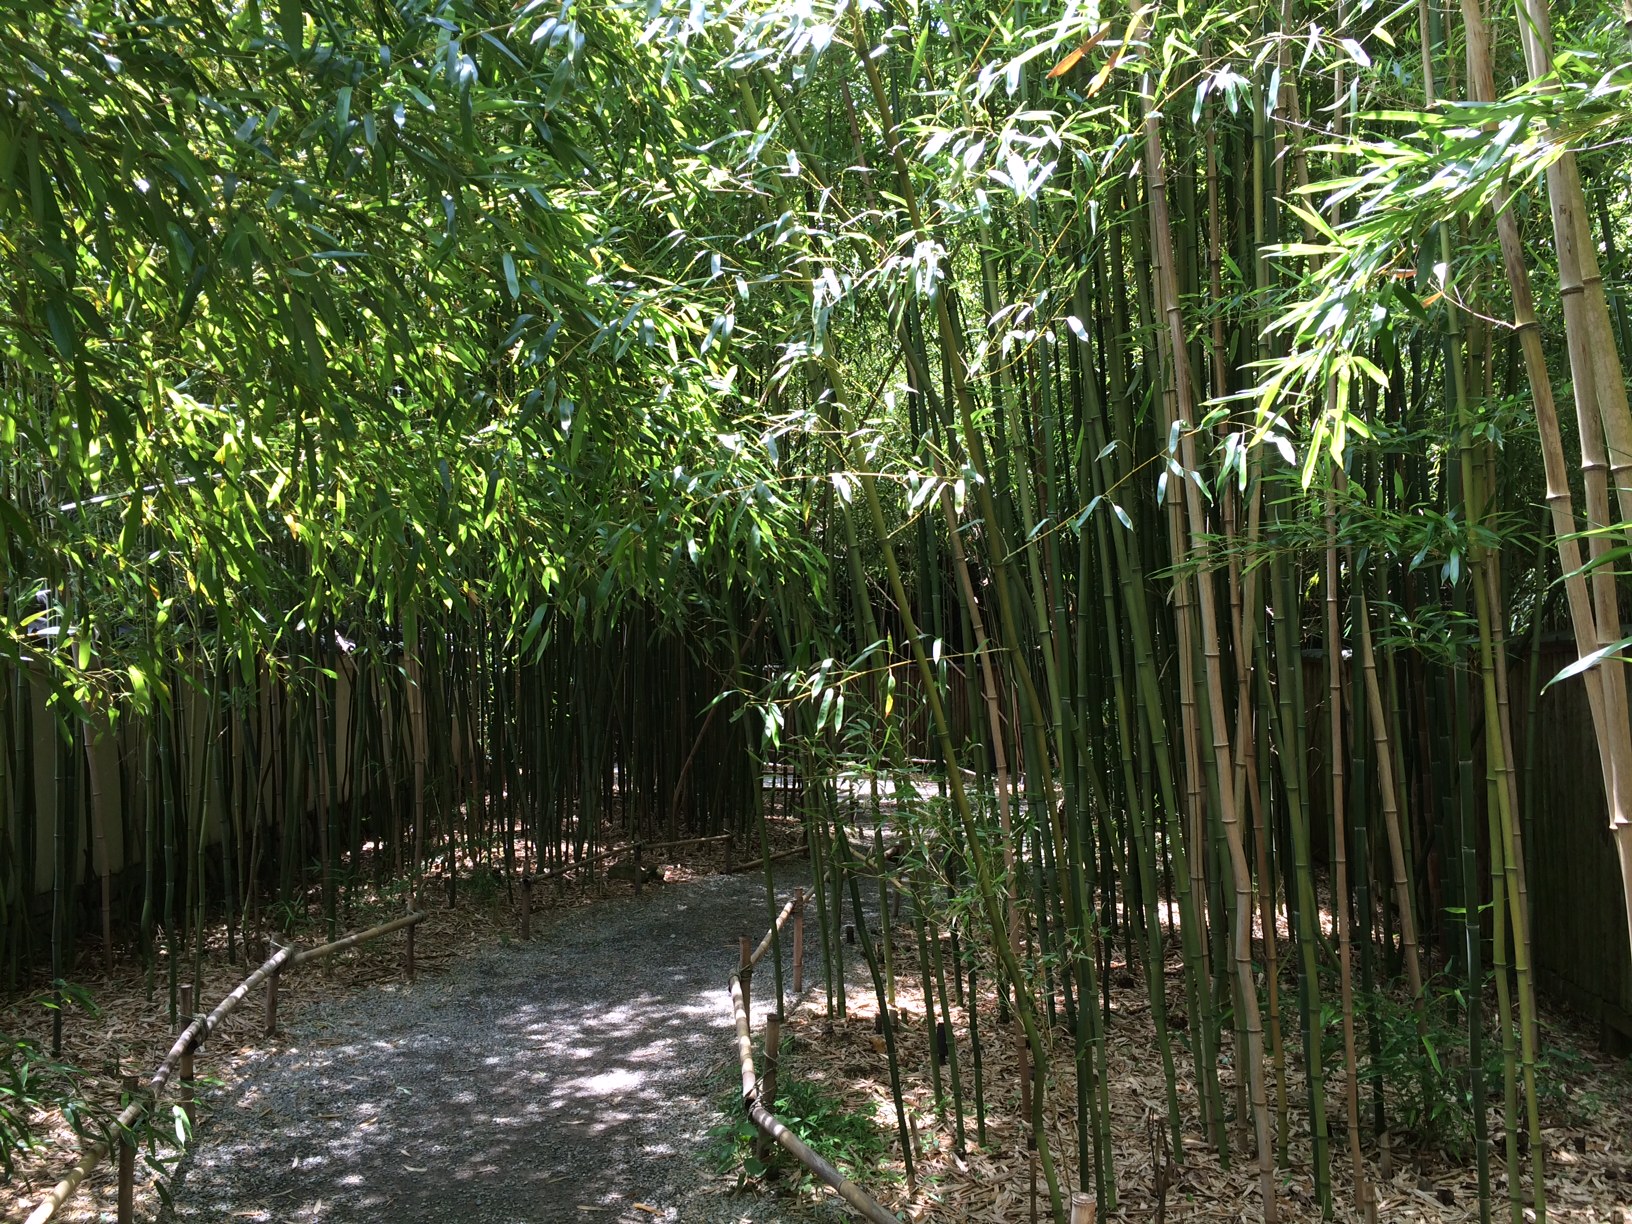 Bamboo forest at Cheekwood Botanical Garden